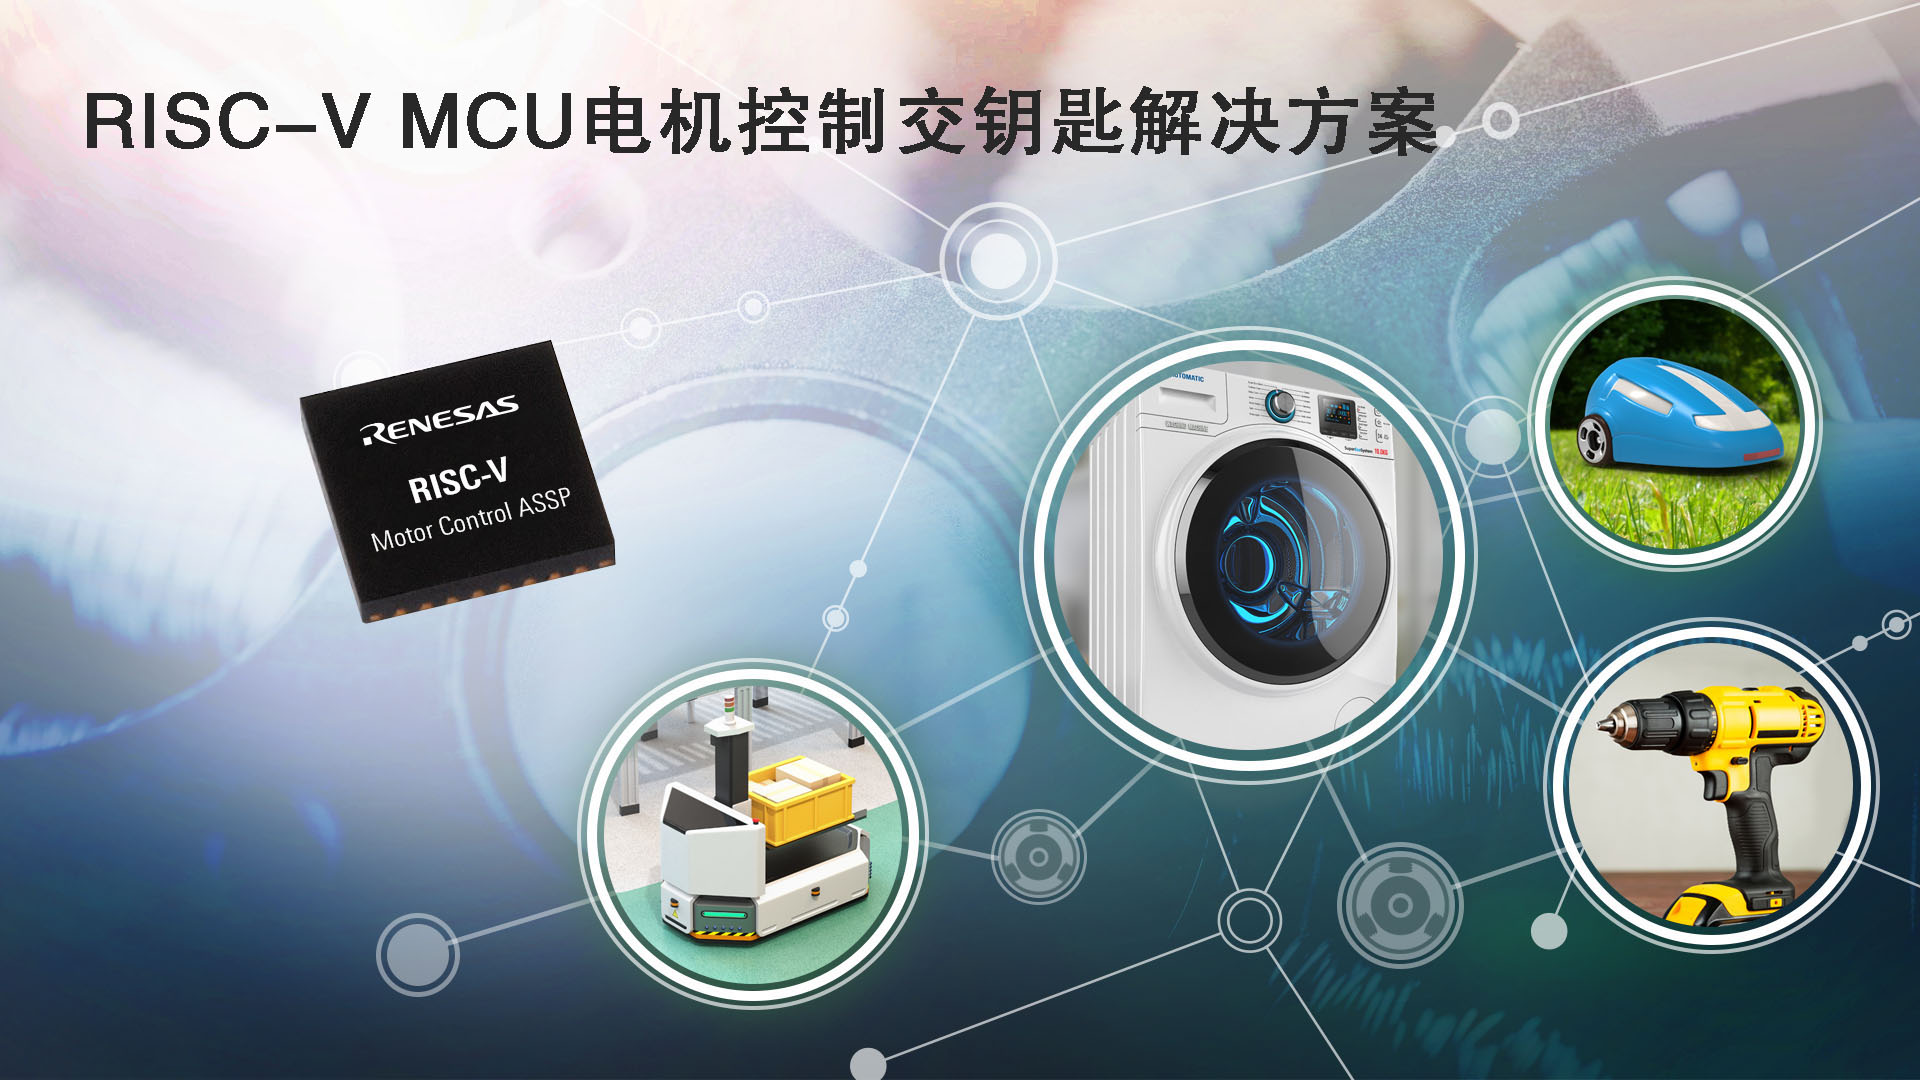 RISC-V MCU电机控制交钥匙解决方案.jpg